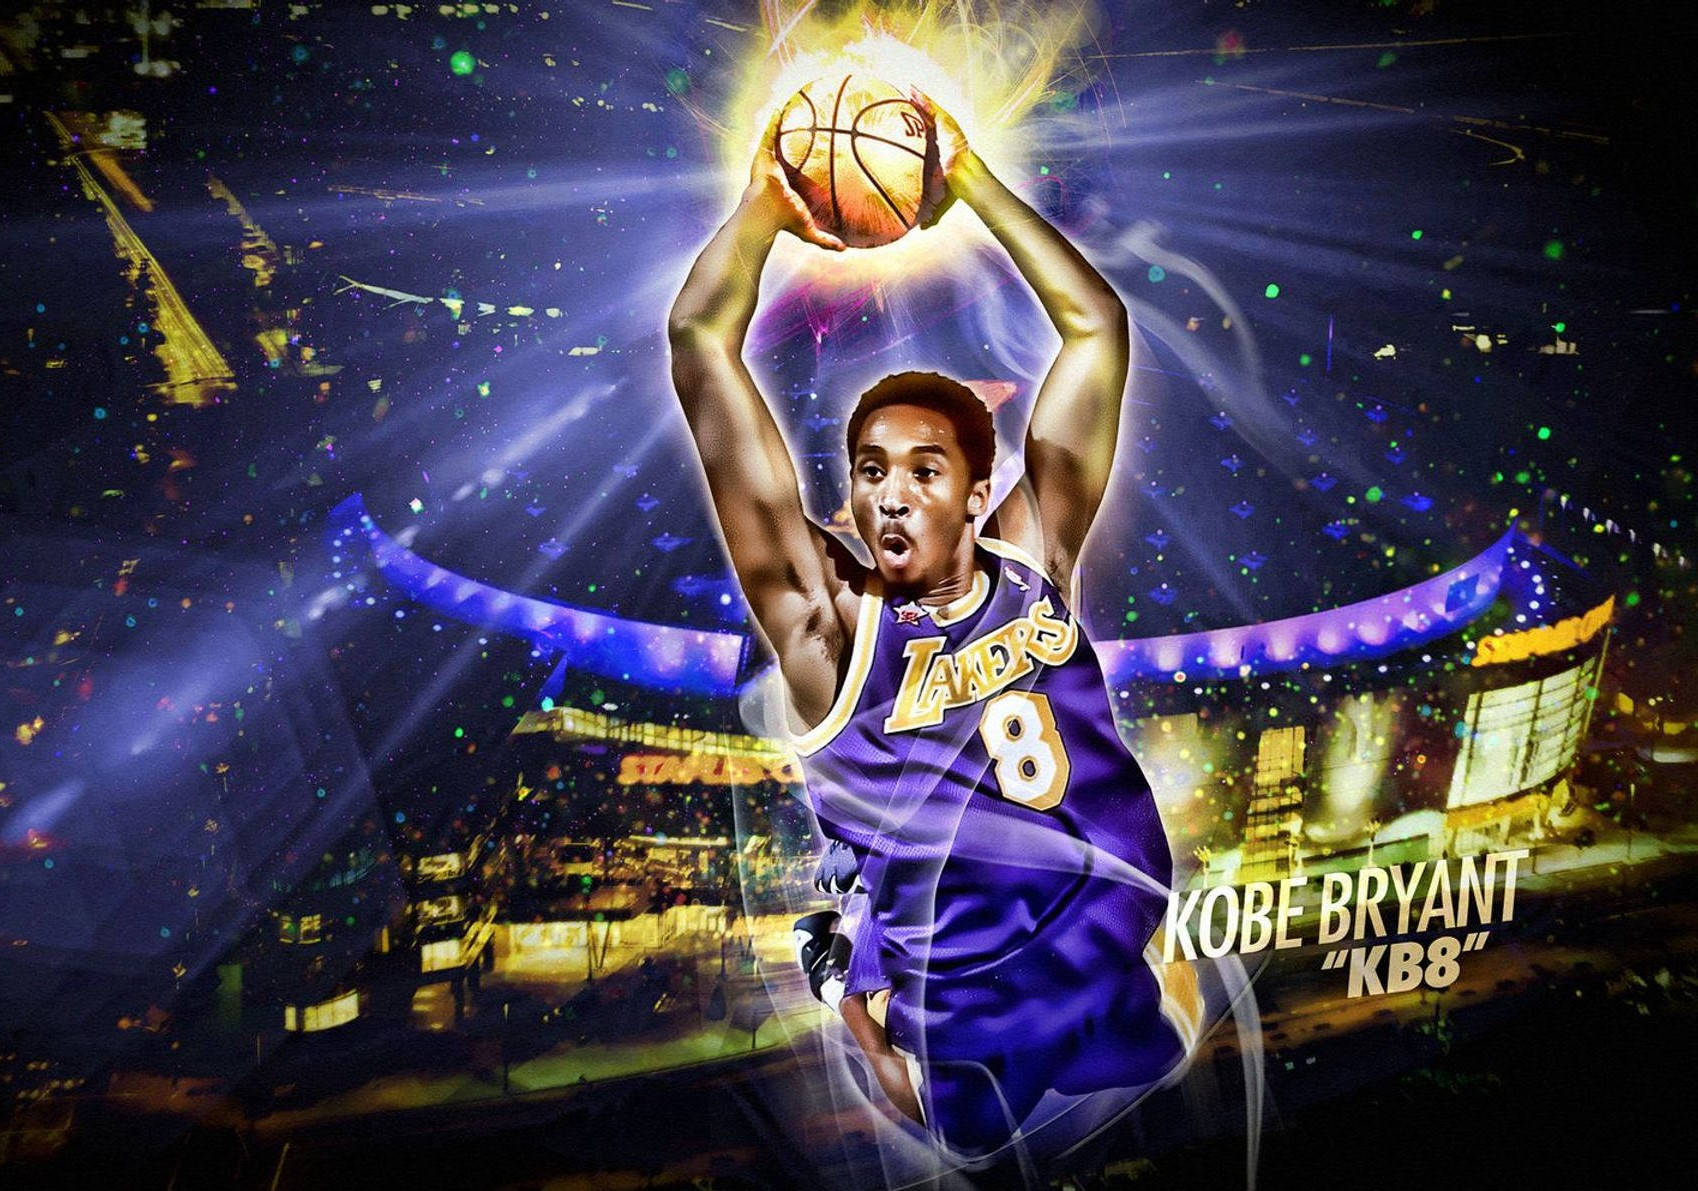 Inspirationeines Champions - Kobe Bryant Wallpaper